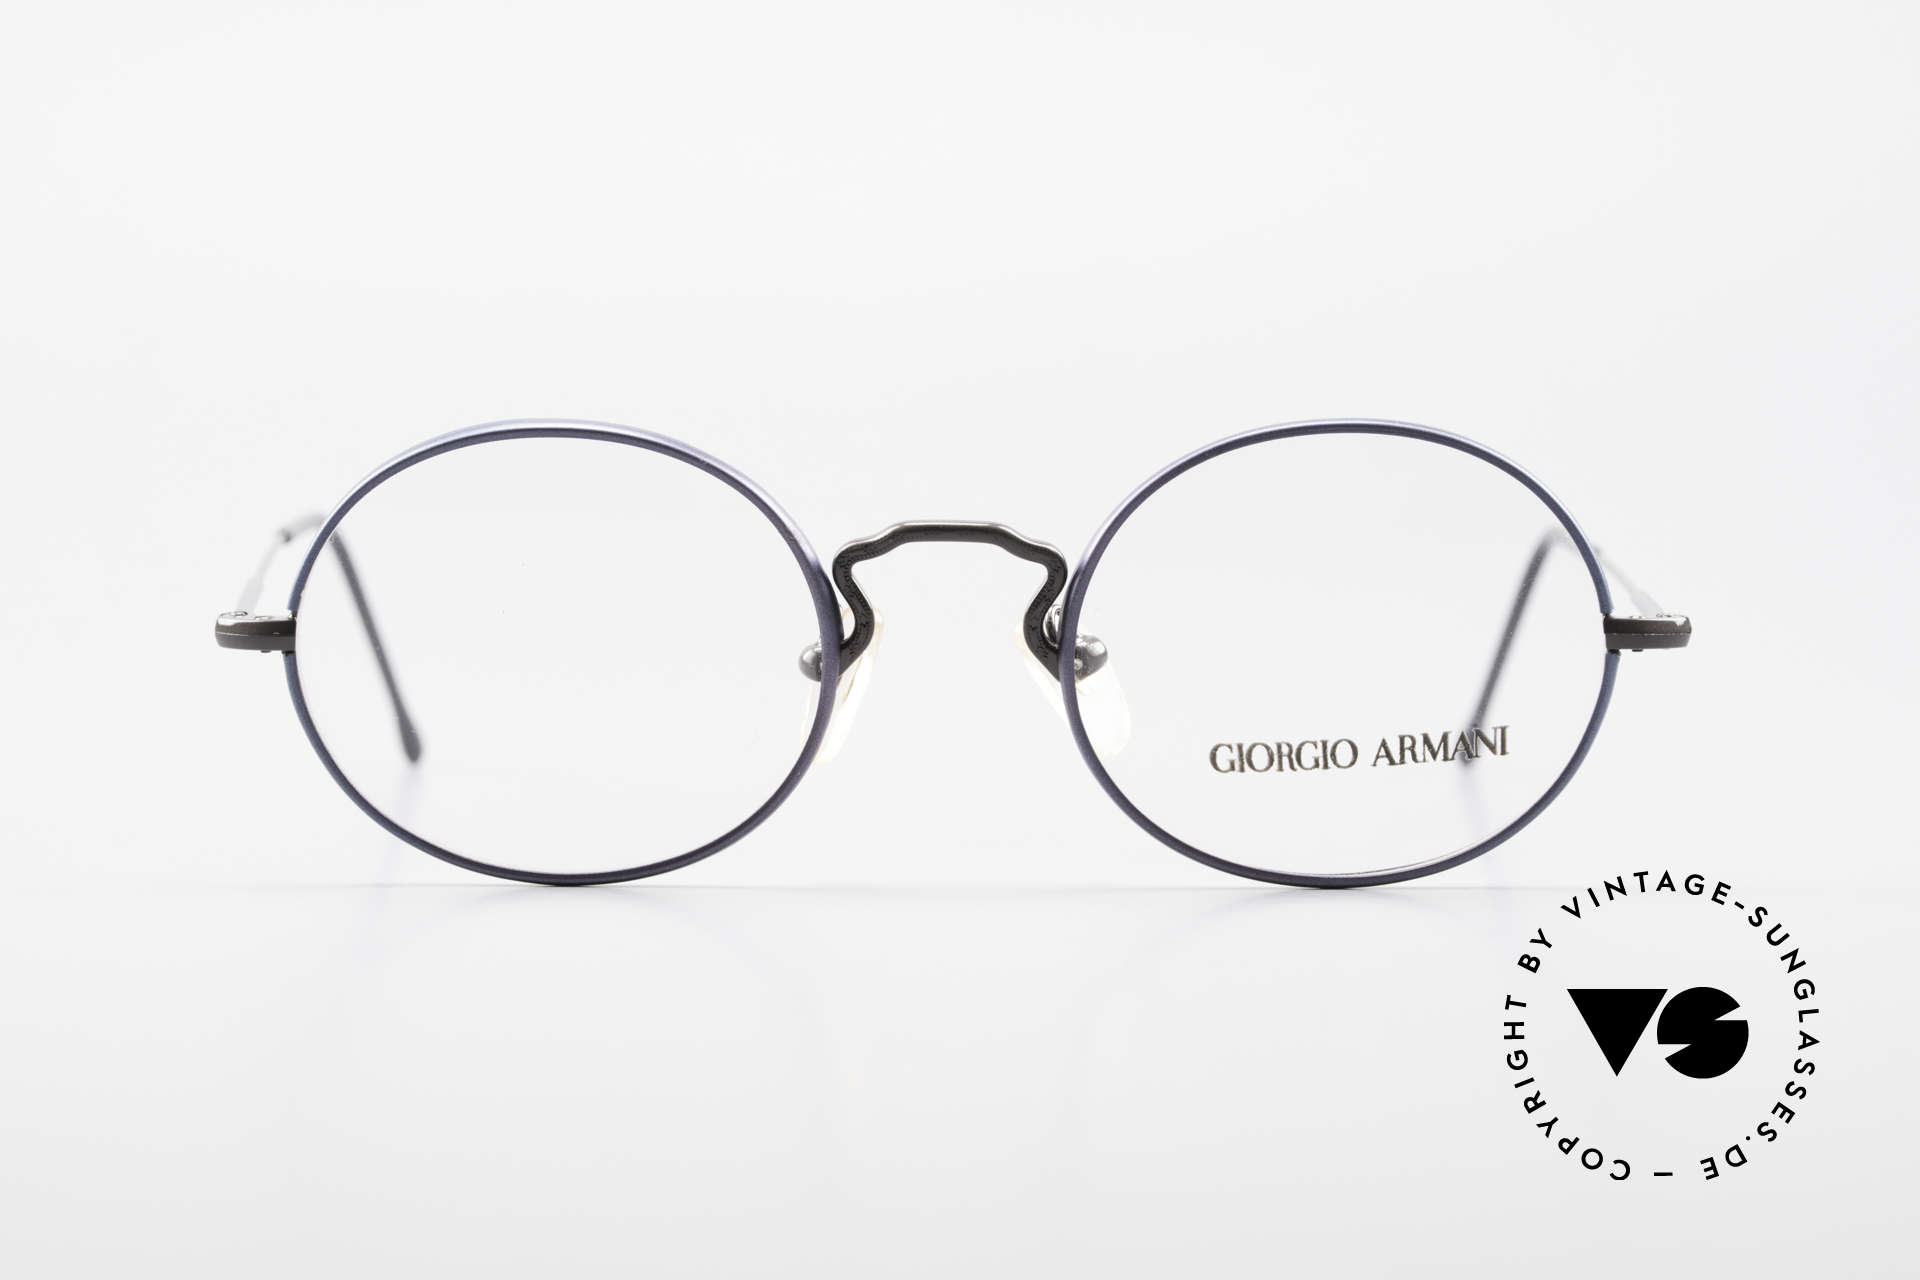 Giorgio Armani 247 No Retro Eyeglasses 90's Oval, small oval-round frame design' - a timeless classic!, Made for Men and Women